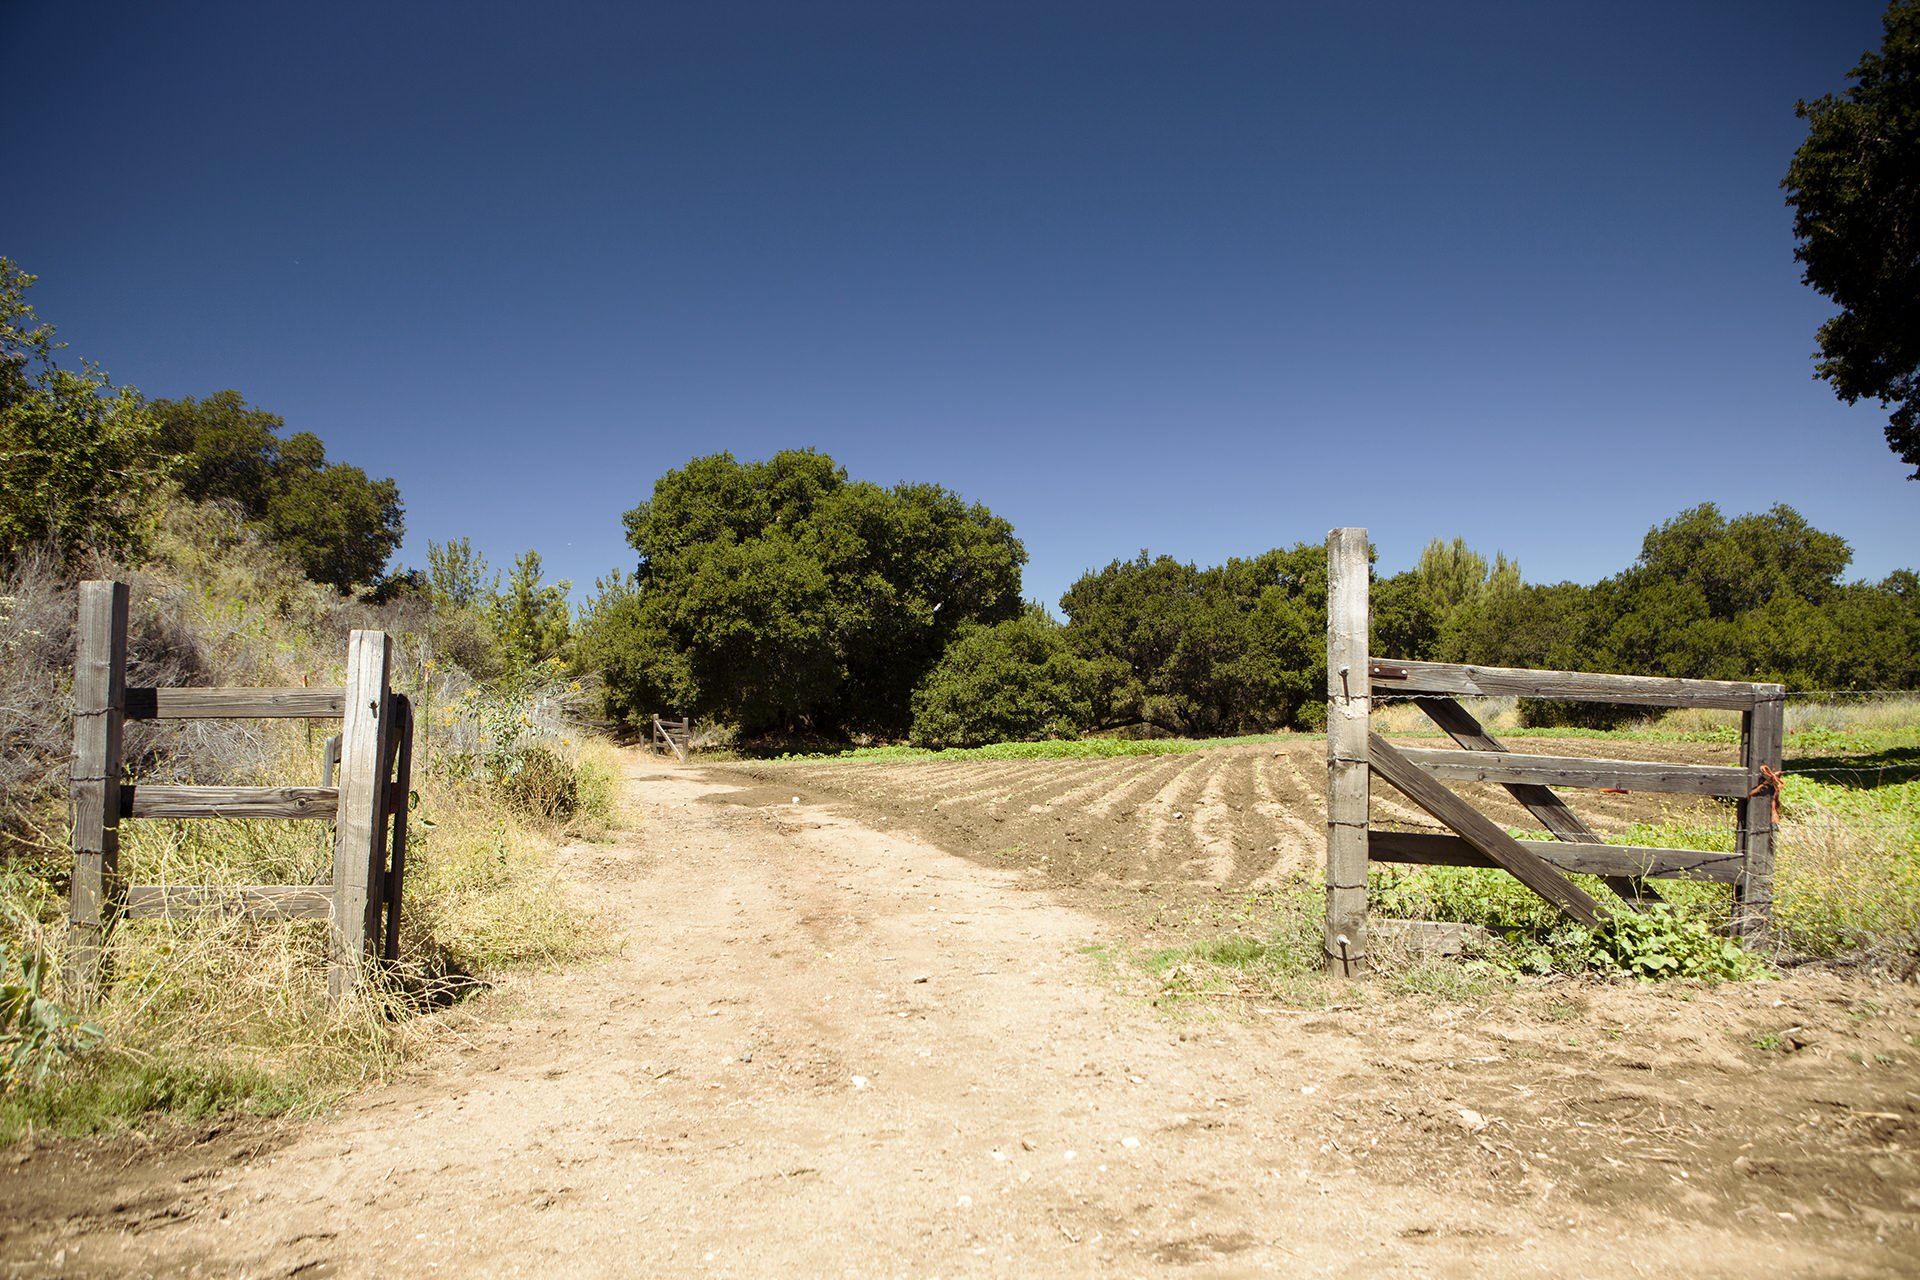 Plateau Meadow - Gate